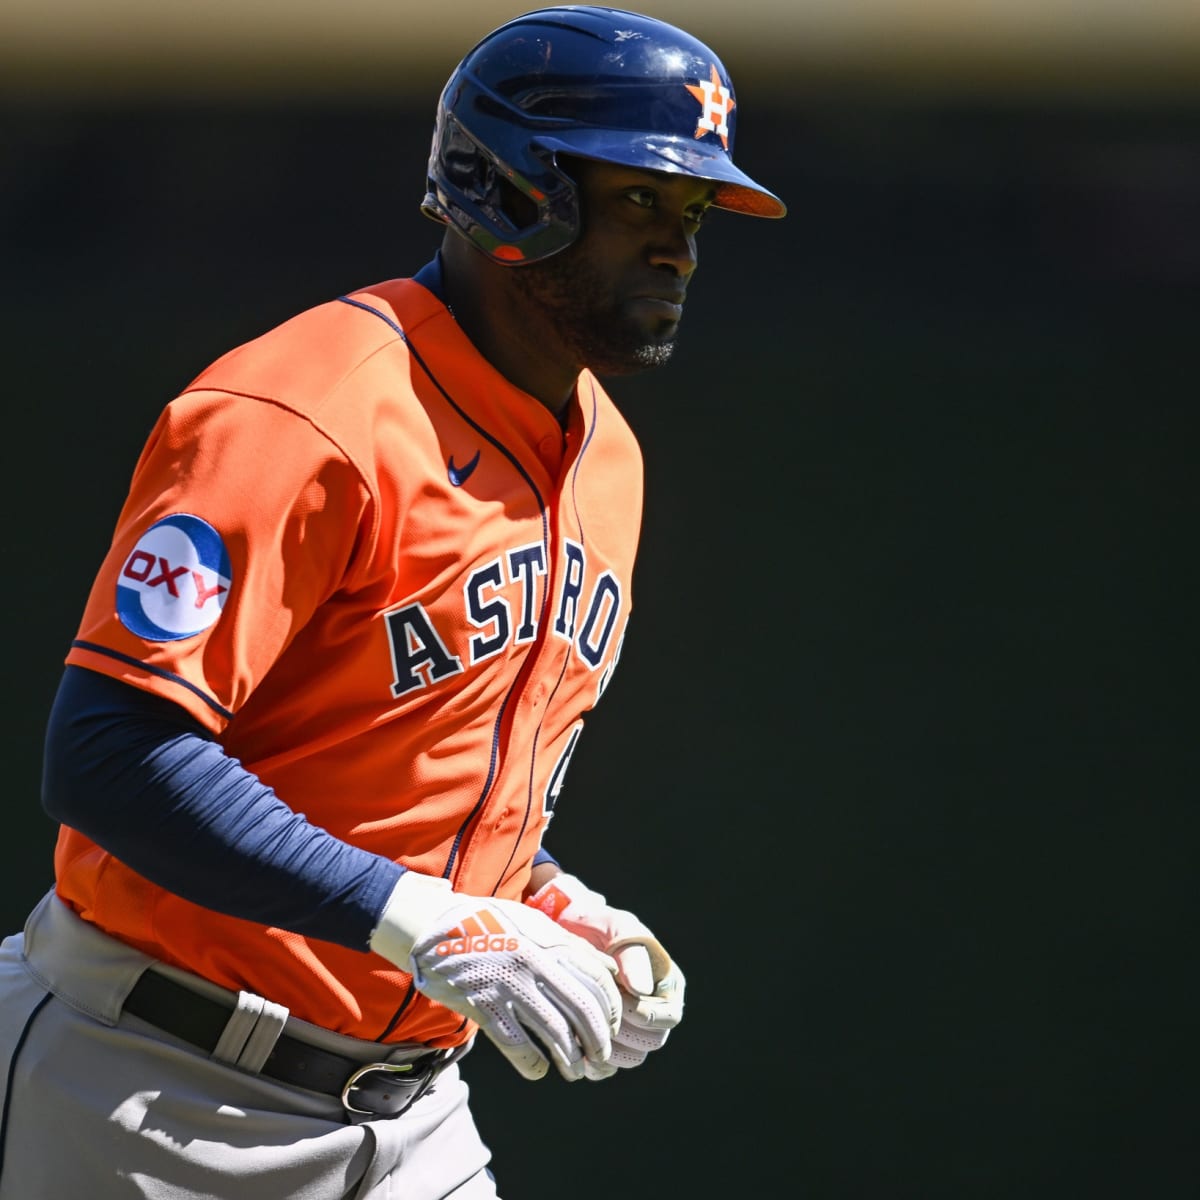 Houston Astros - The Astros have signed OF Yordan Alvarez to a six